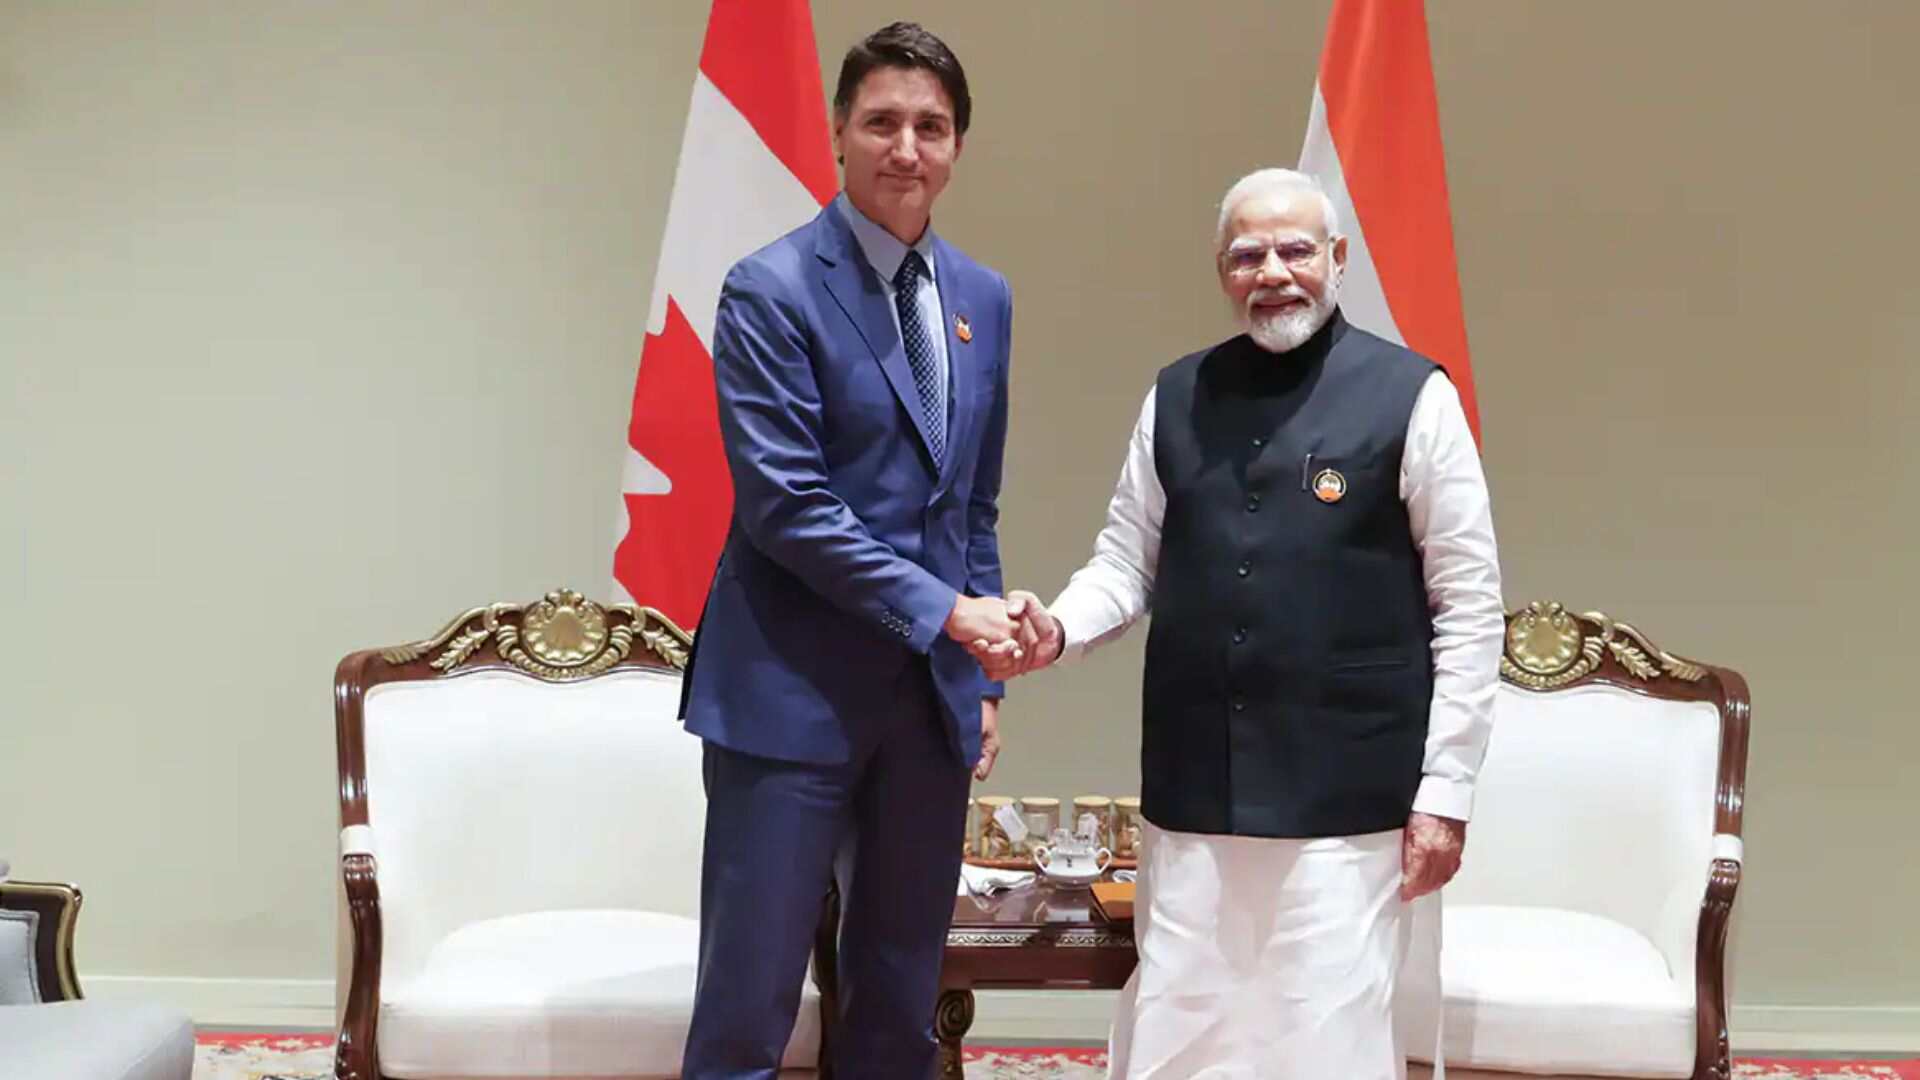 Justin Trudeau Cites ‘Rule Of Law, Human Rights’ In Congratulatory Message To PM Modi Amid India-Canada Tensions